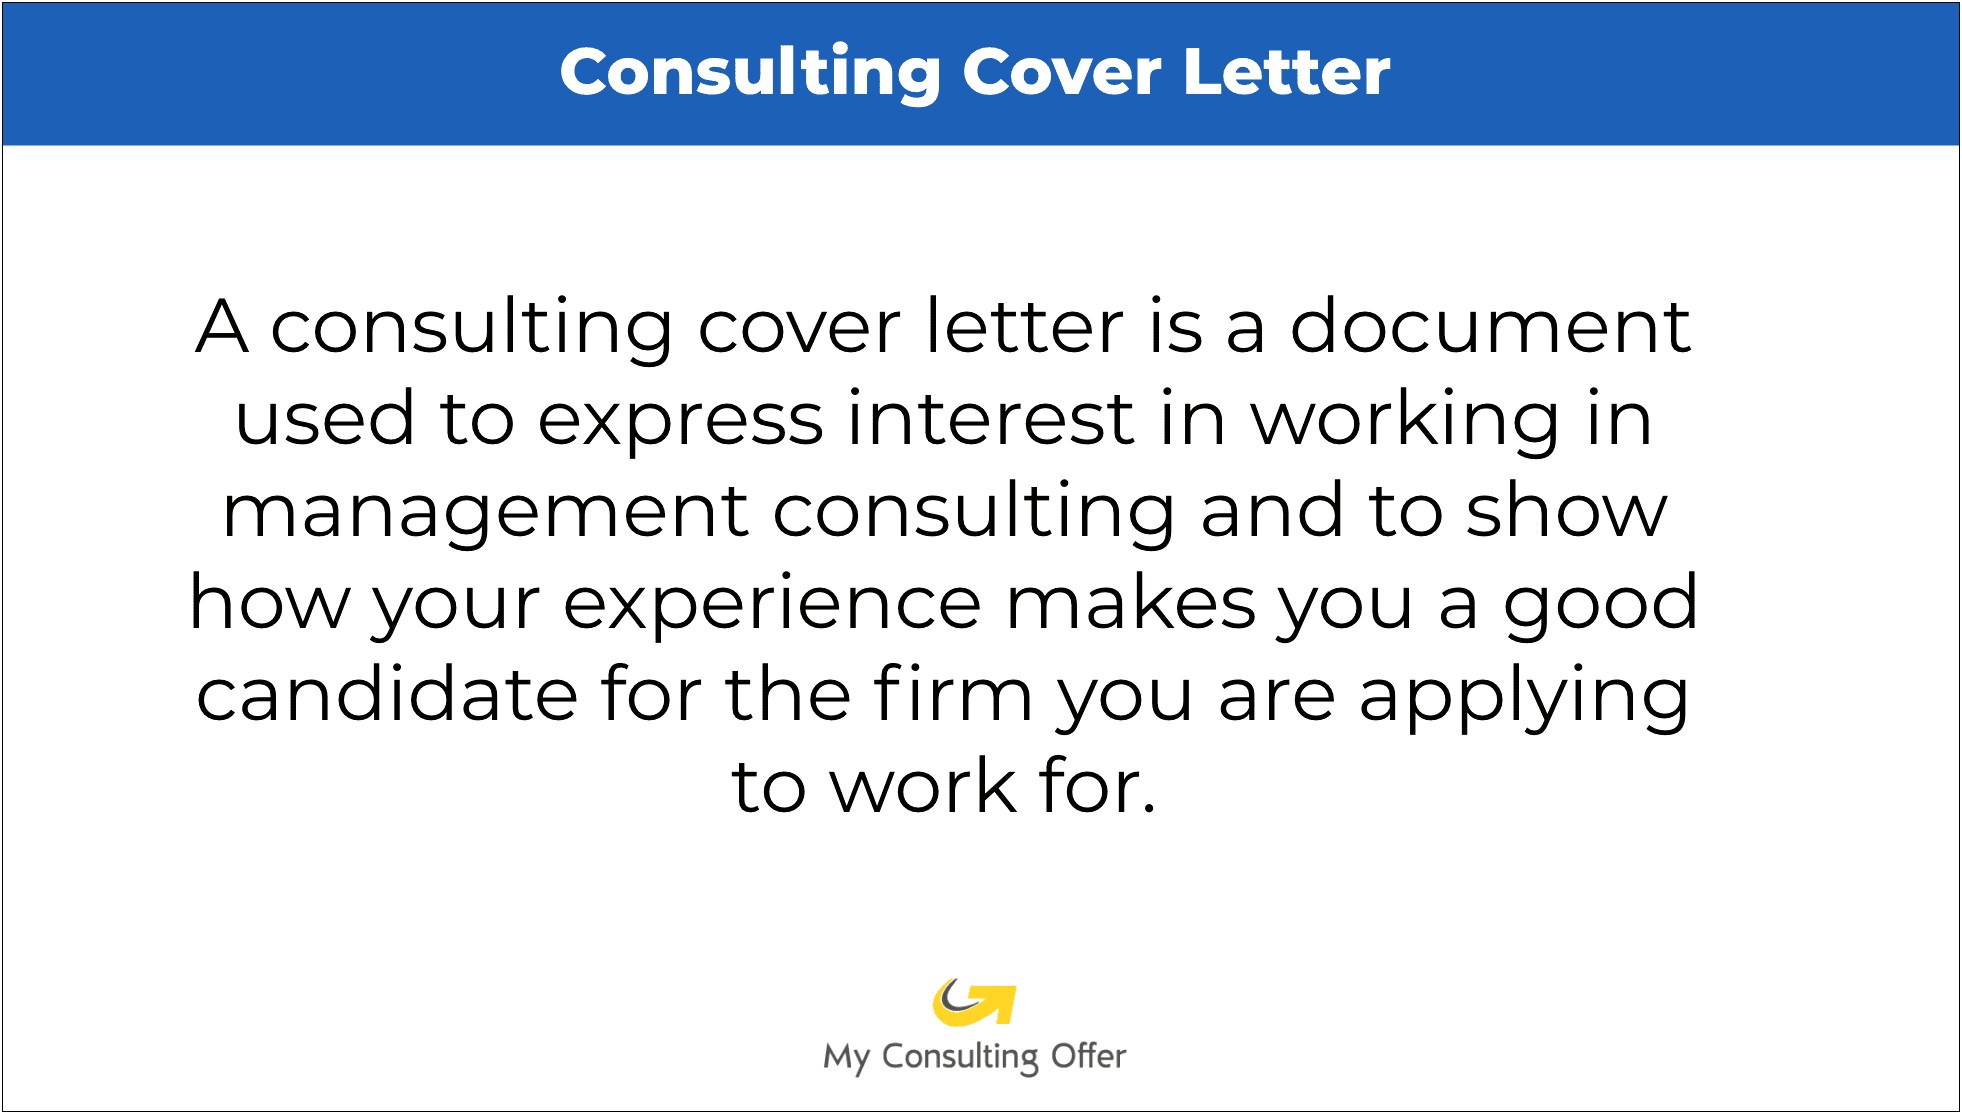 Should You Address Resume Gap In Cover Letter